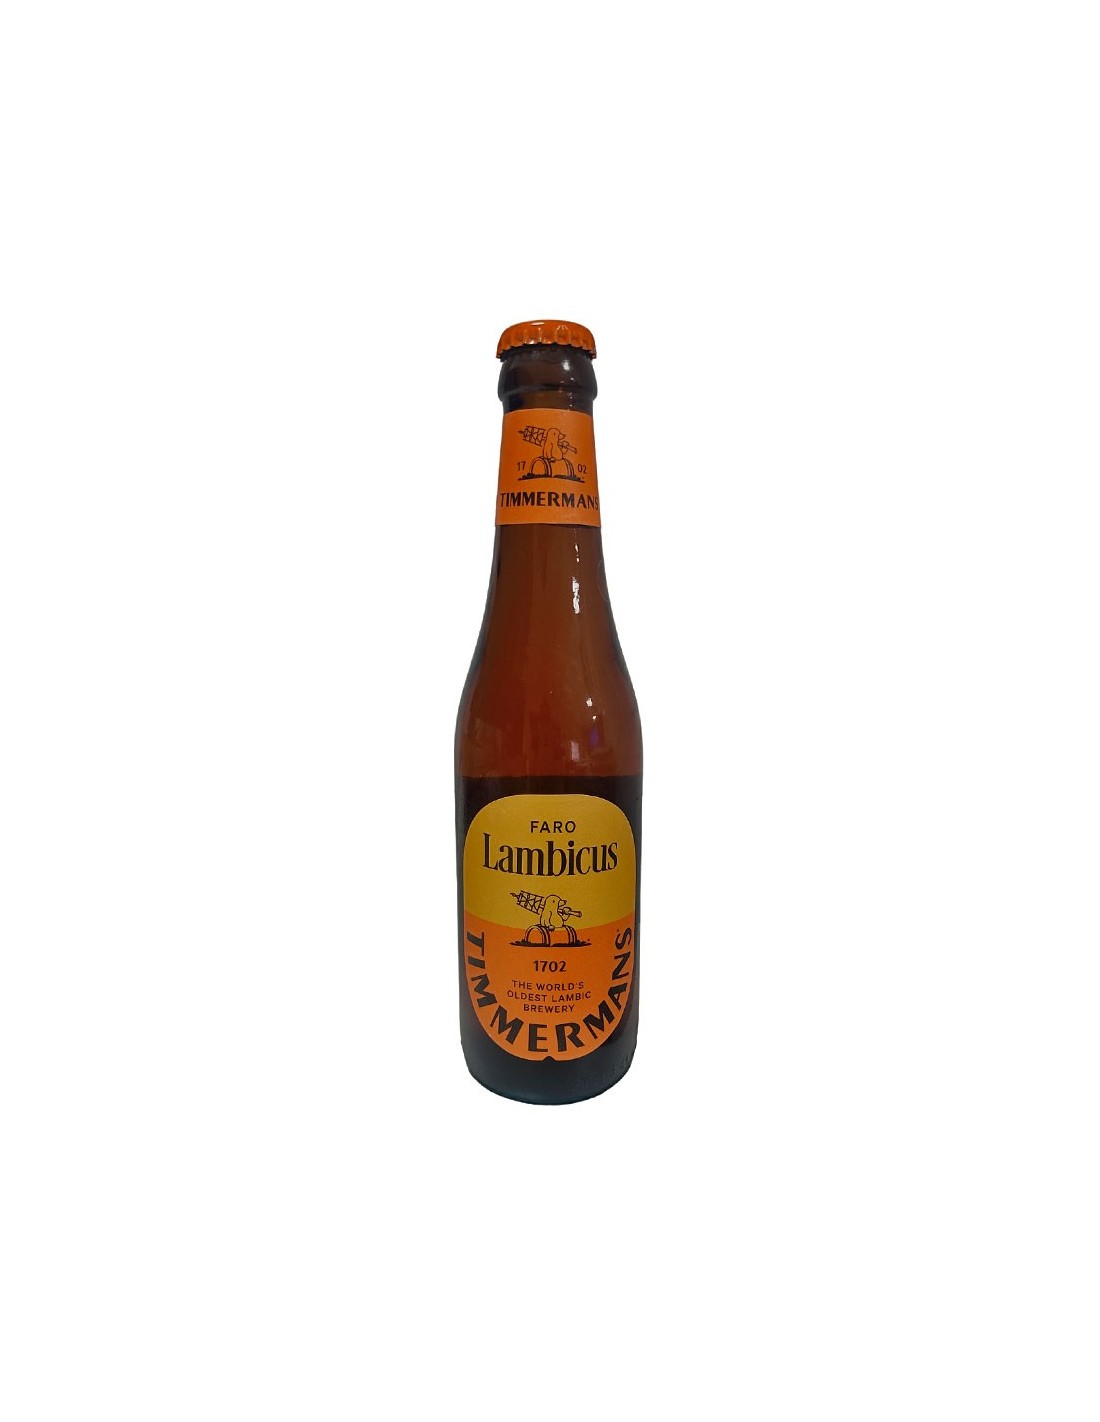 vente en ligne de biere belge de tradition, biere de style lambic